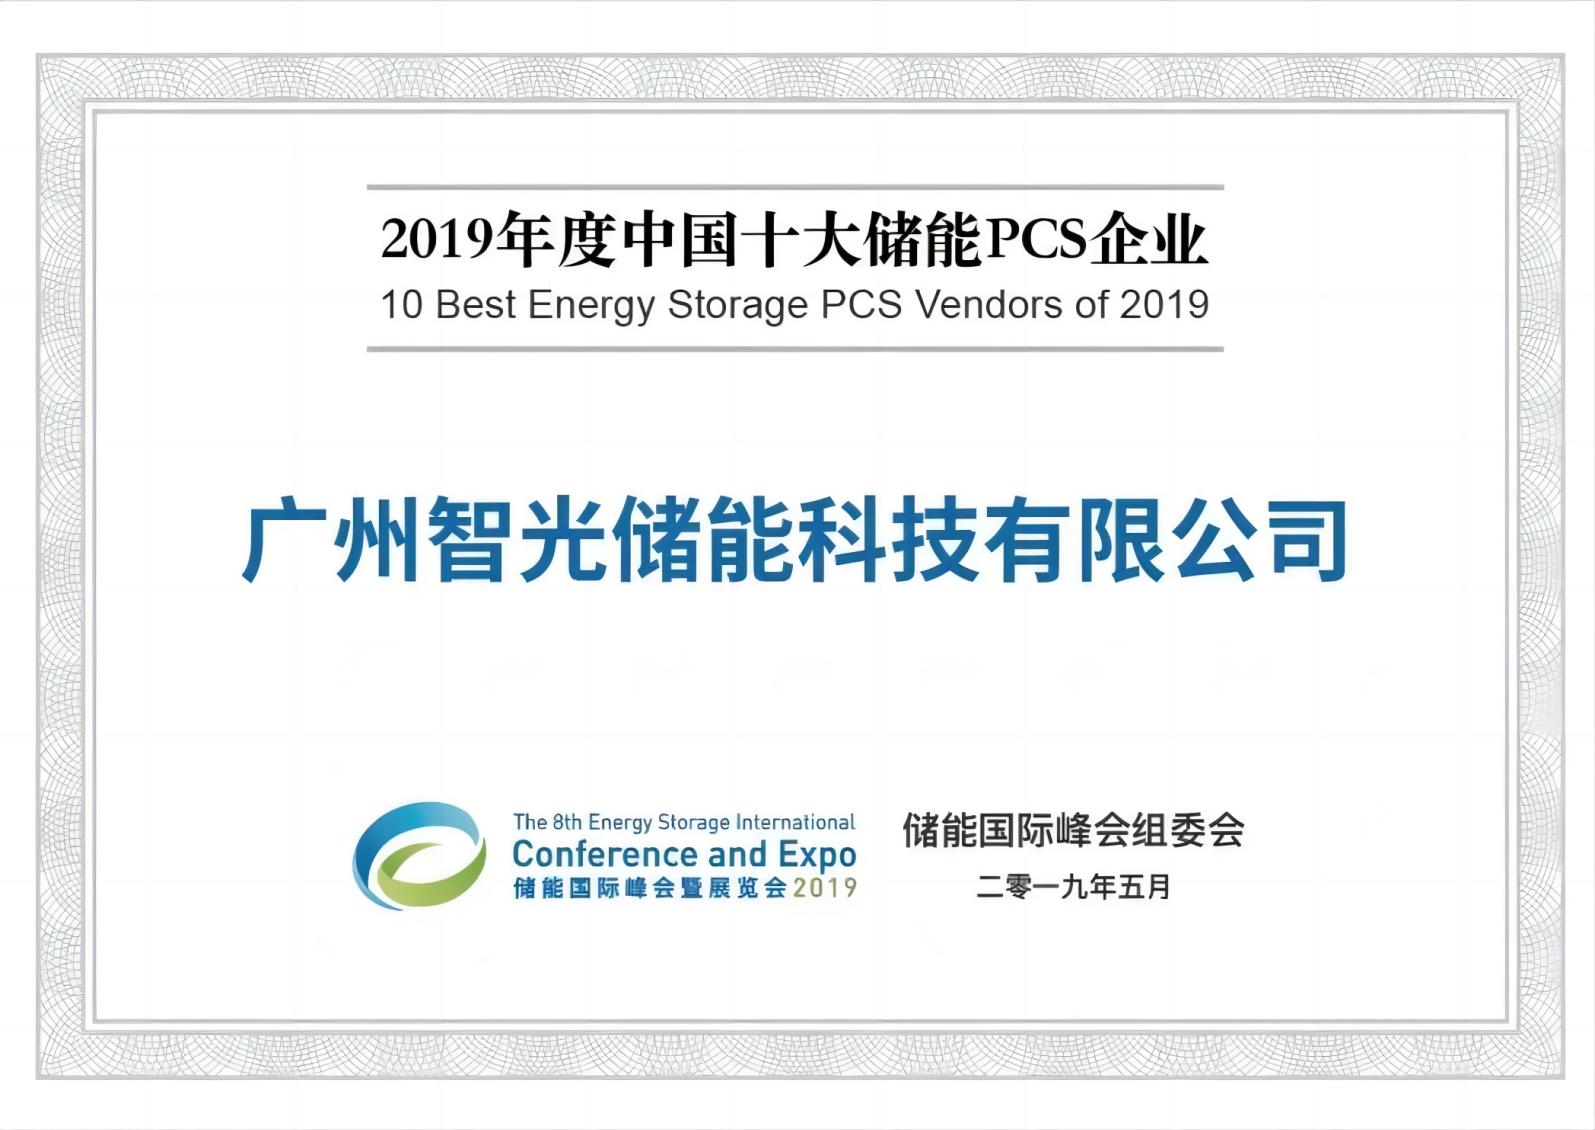 2019 Top 10 Energy Storage PCS Enterprises in China